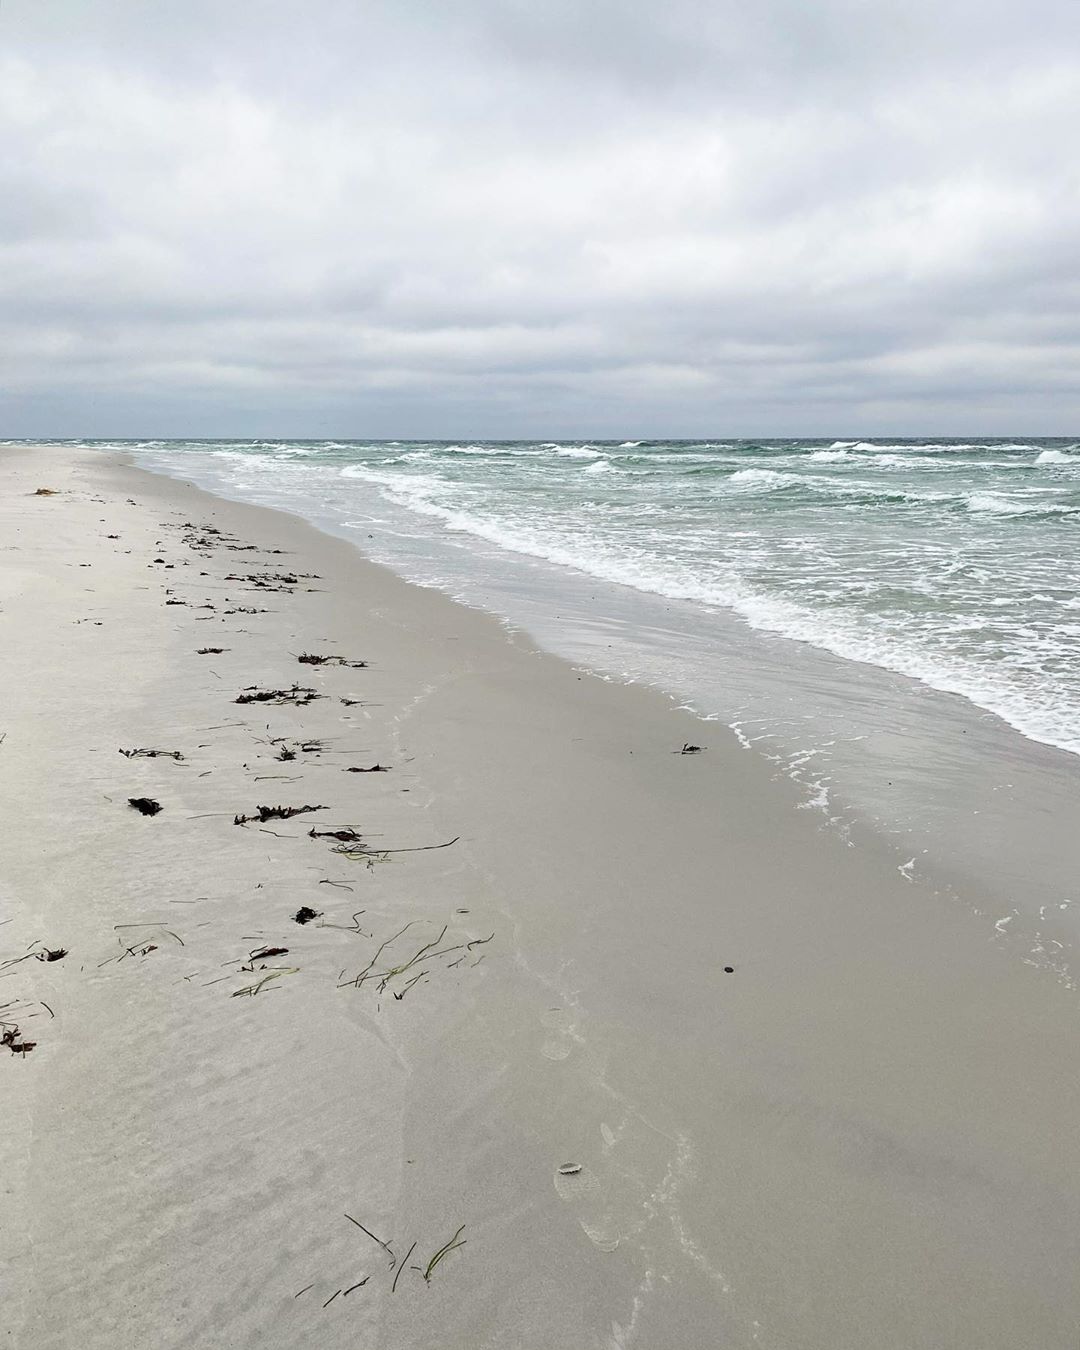 Dueodde strand med en smule tang på sandet og små bølger i havet